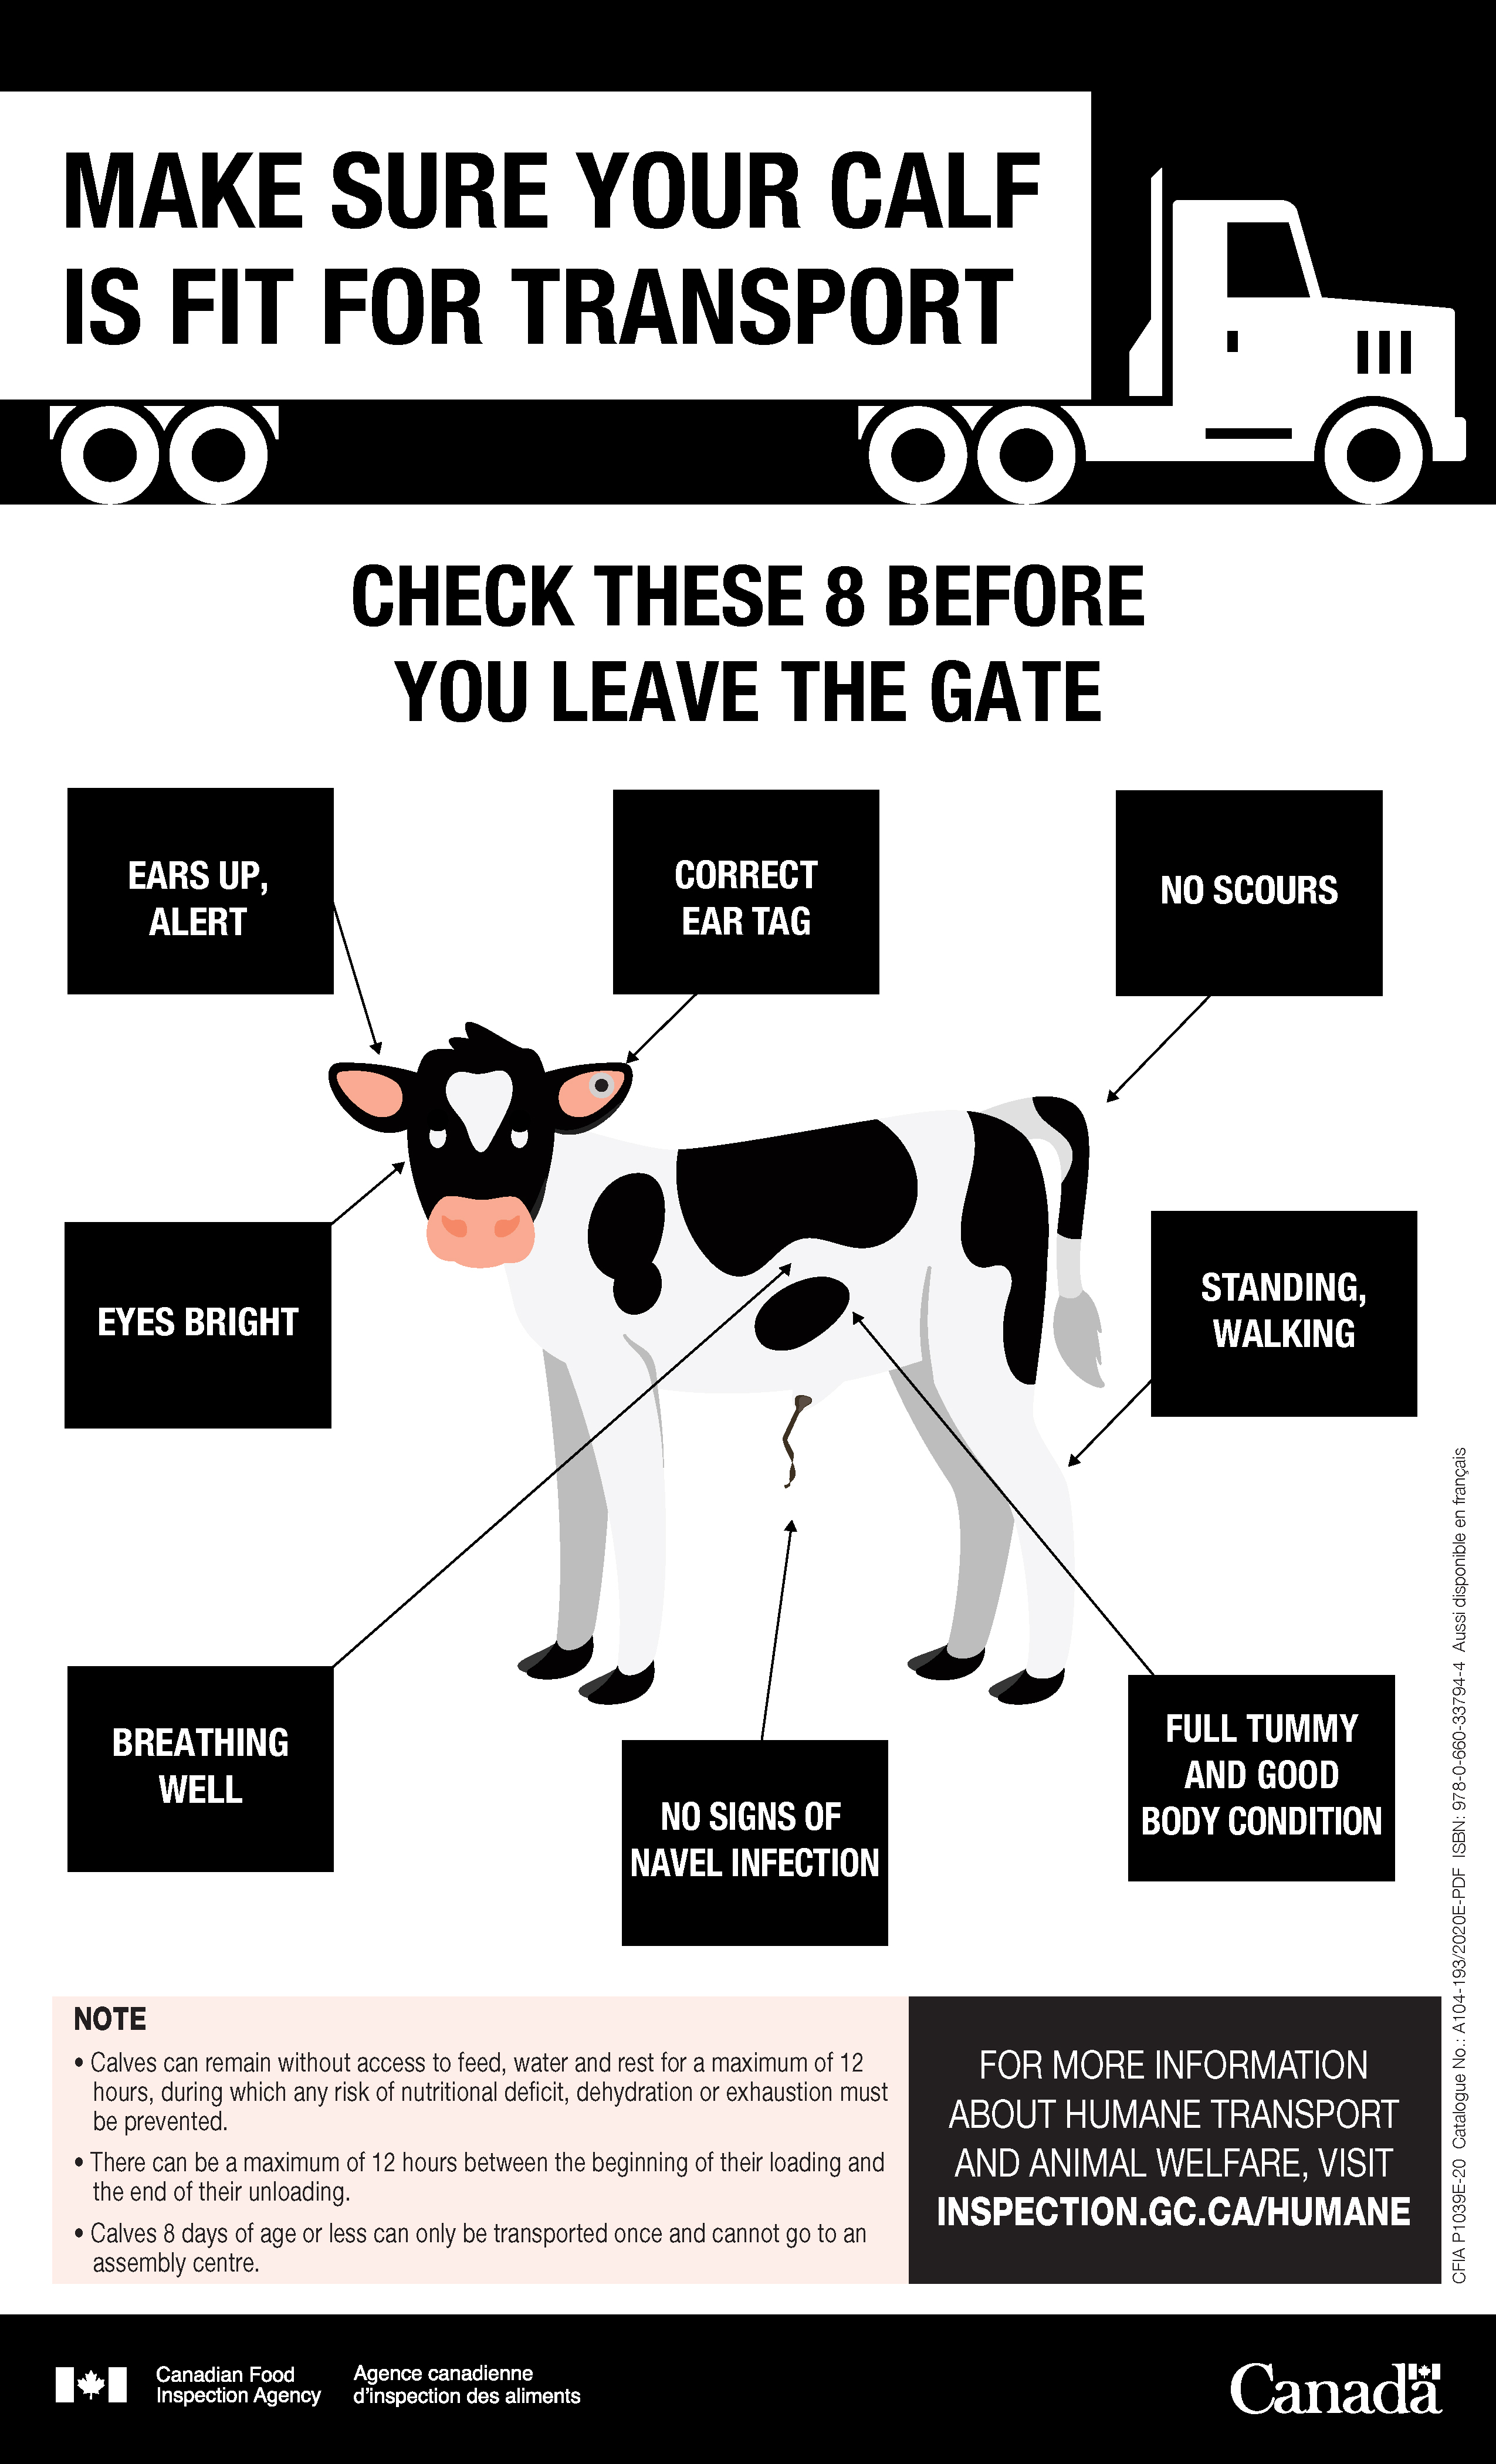 Make sure your calf is fit for transport. Description follows.